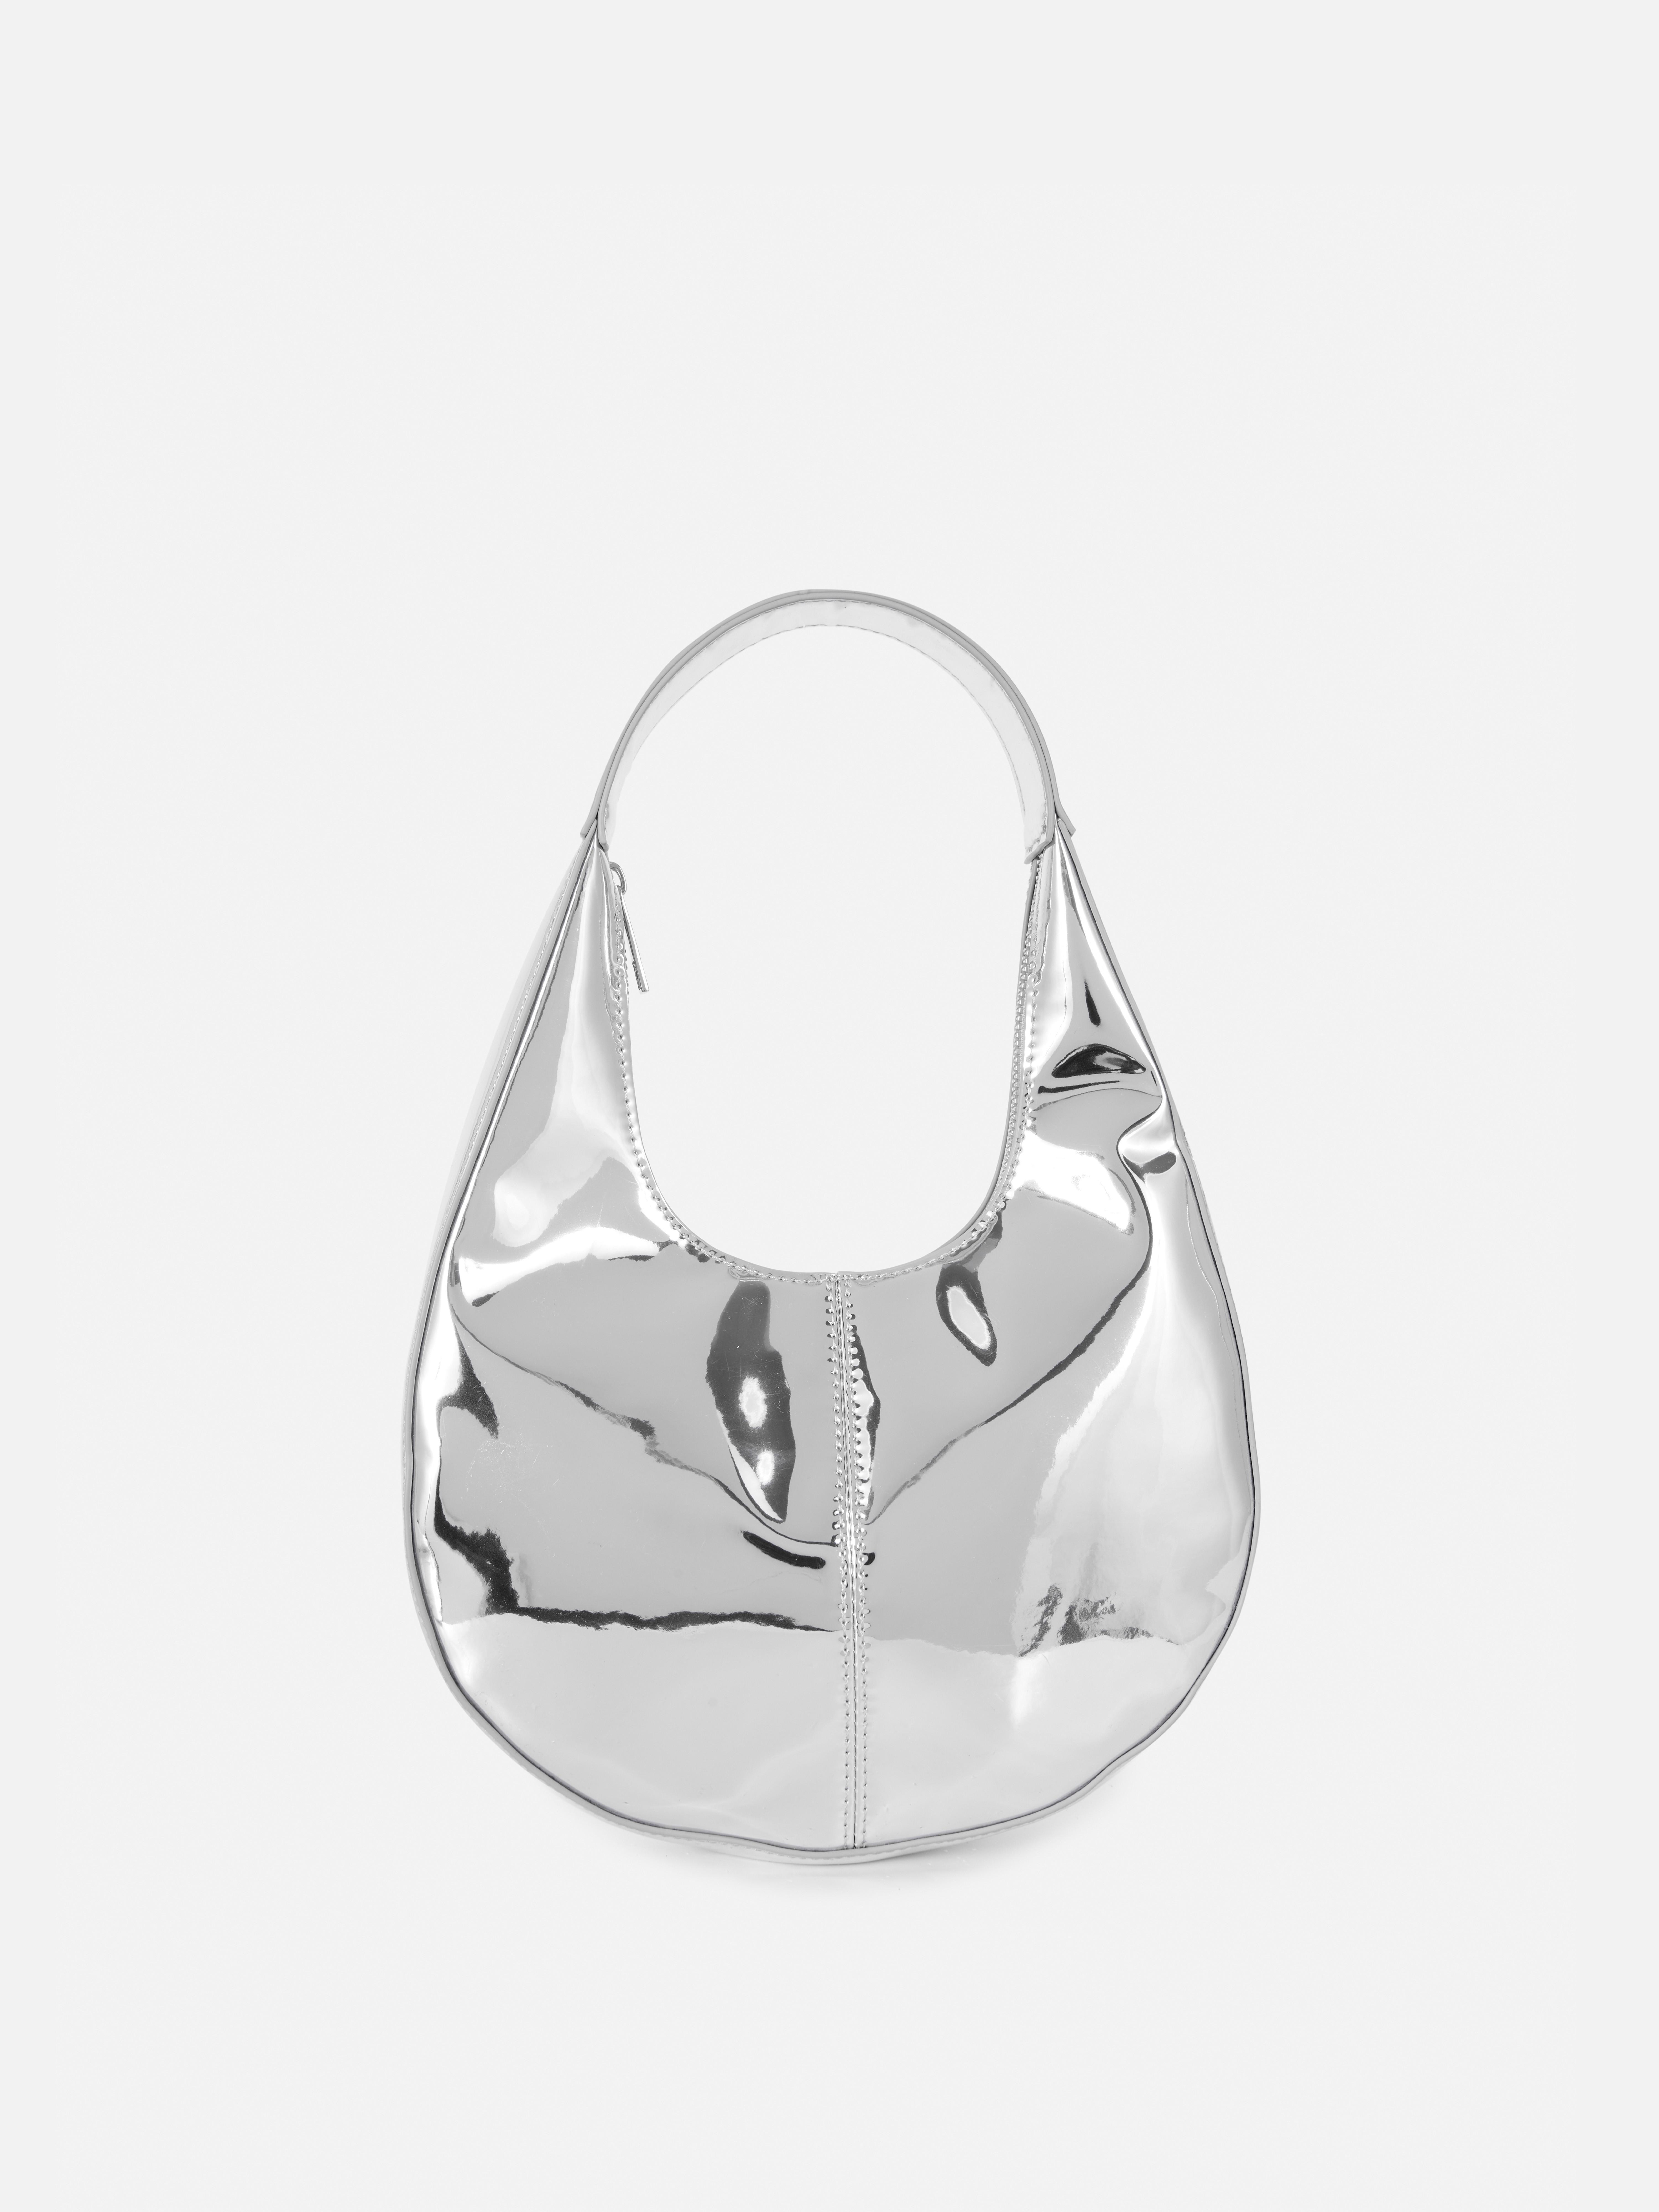 Rita Ora Metallic Scoop Bag